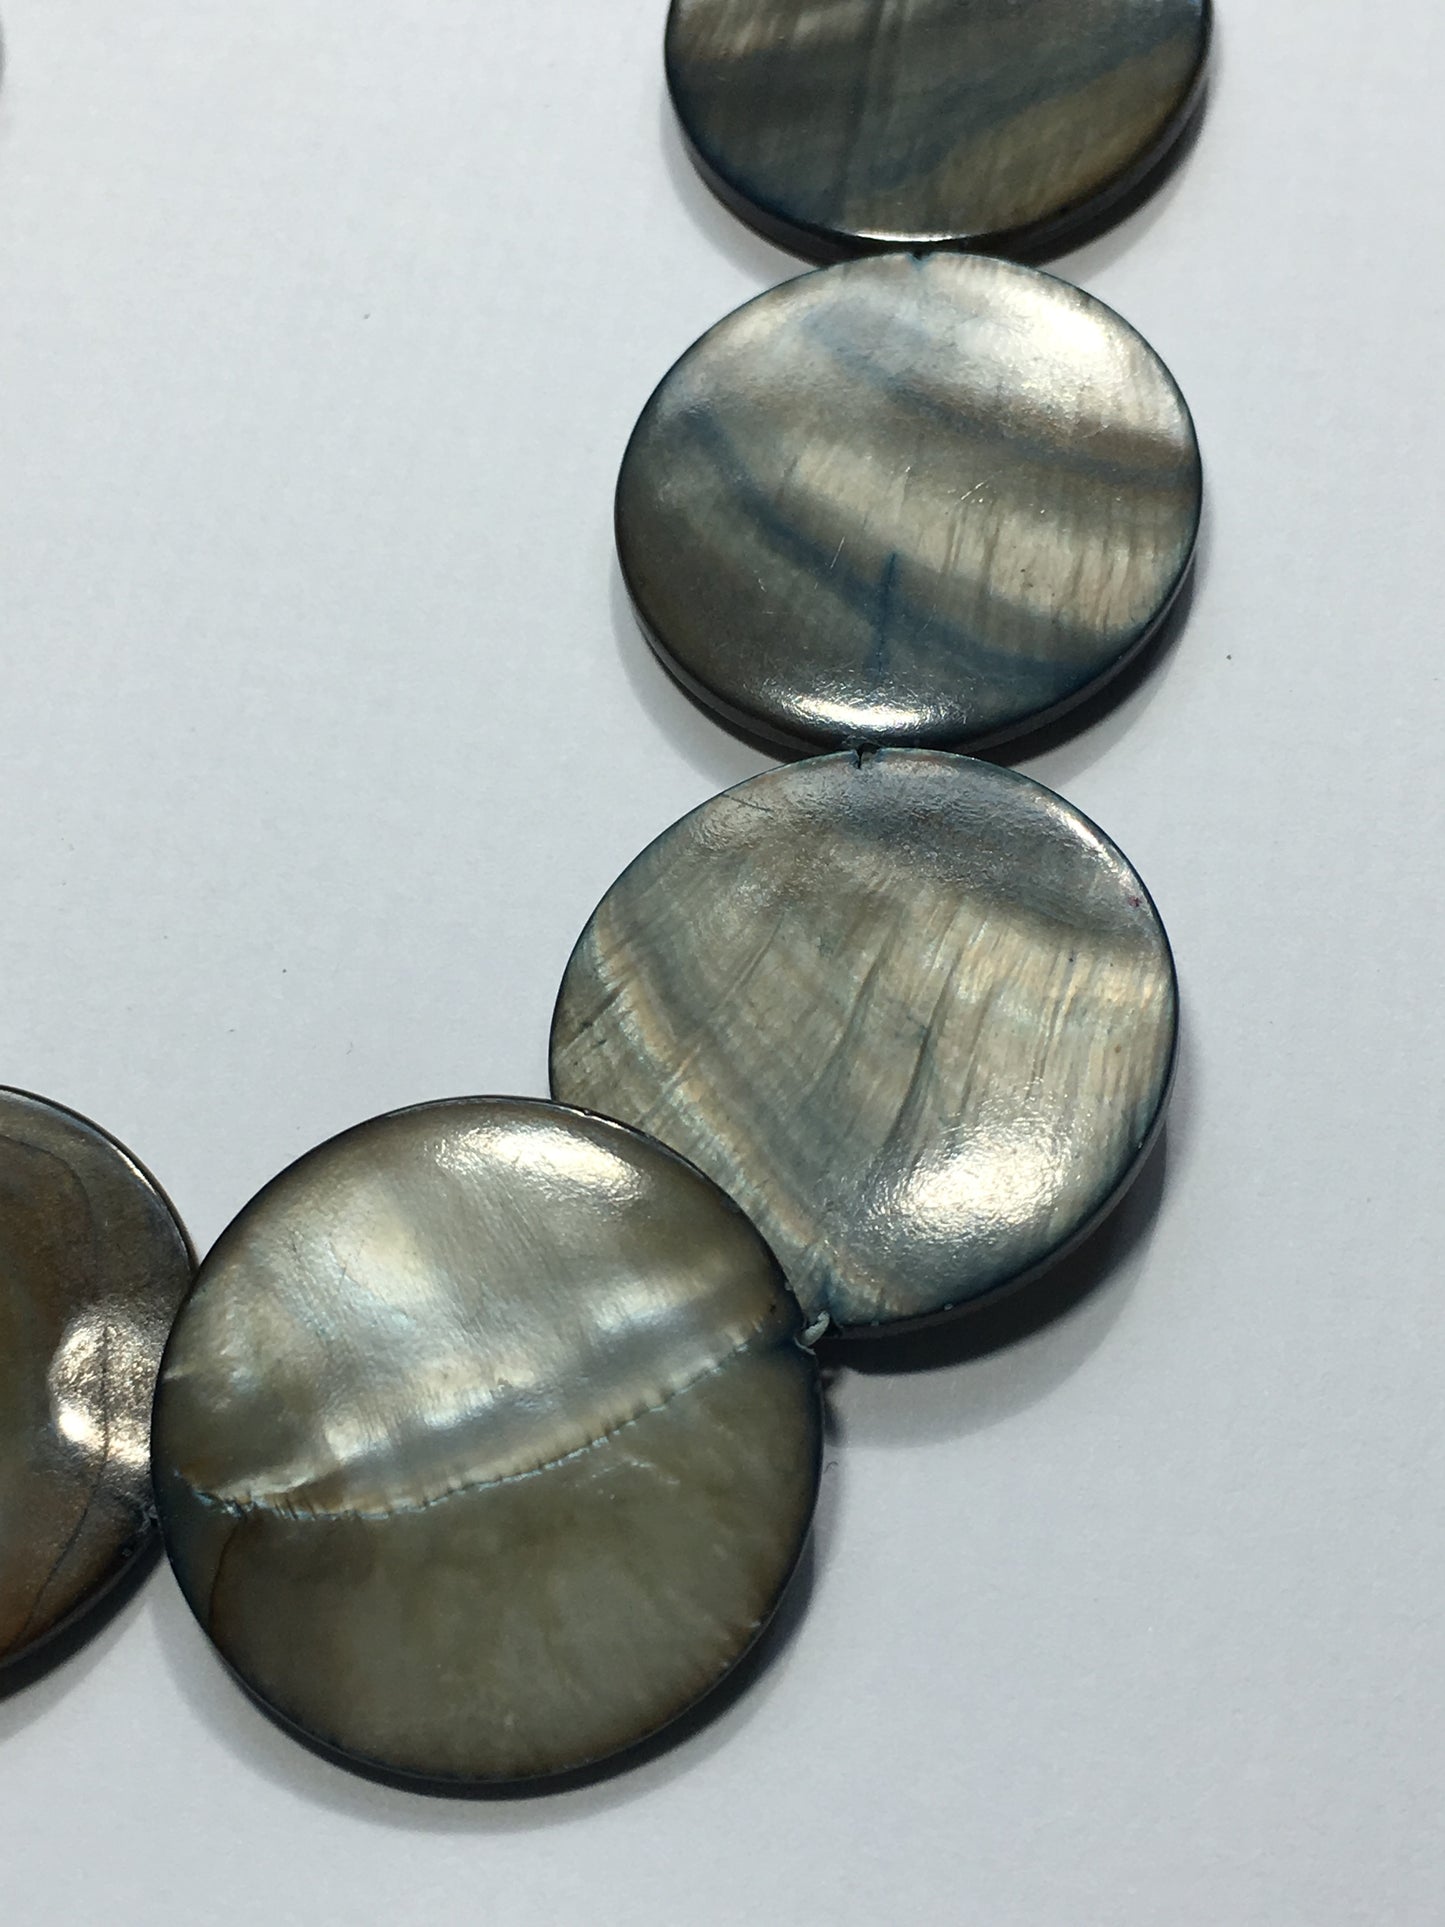 Bead Gallery Jet Gray Shell Lentil Beads, 25 mm - 12 Beads